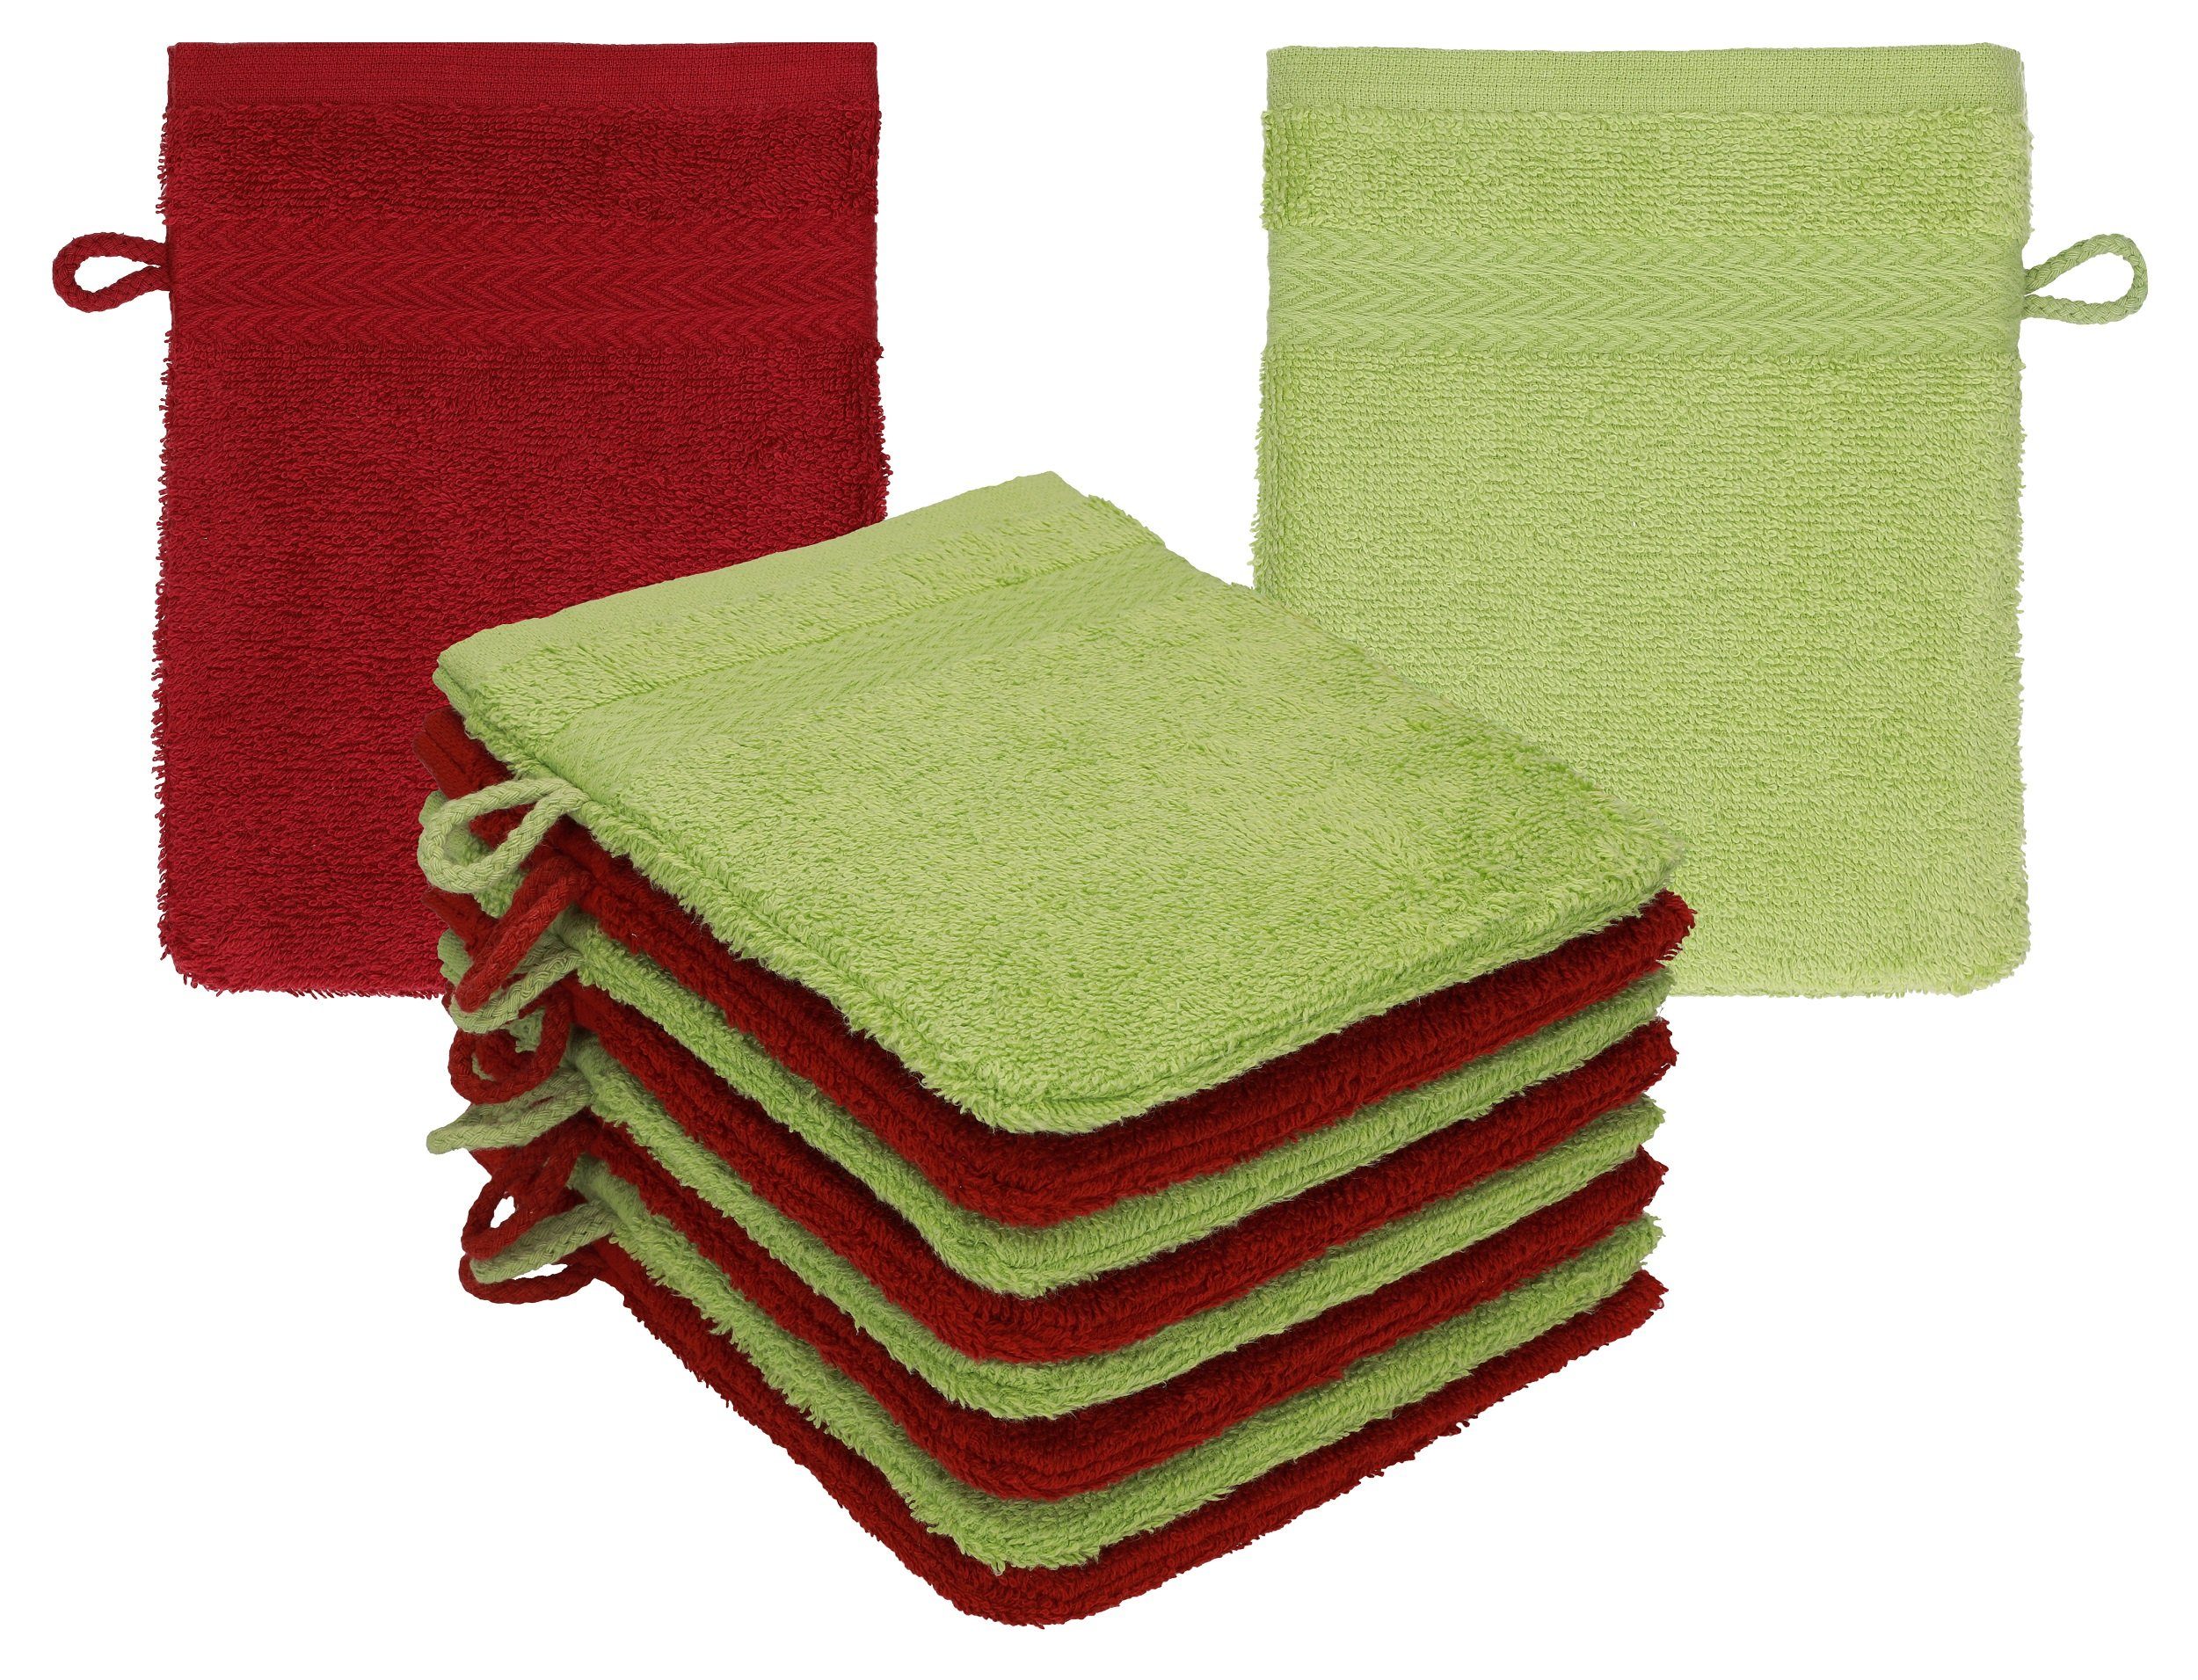 Betz Waschhandschuh 10 Stück Waschhandschuhe Premium 100% Baumwolle Waschlappen Set 16x21 cm Farbe rubinrot - avocadogrün